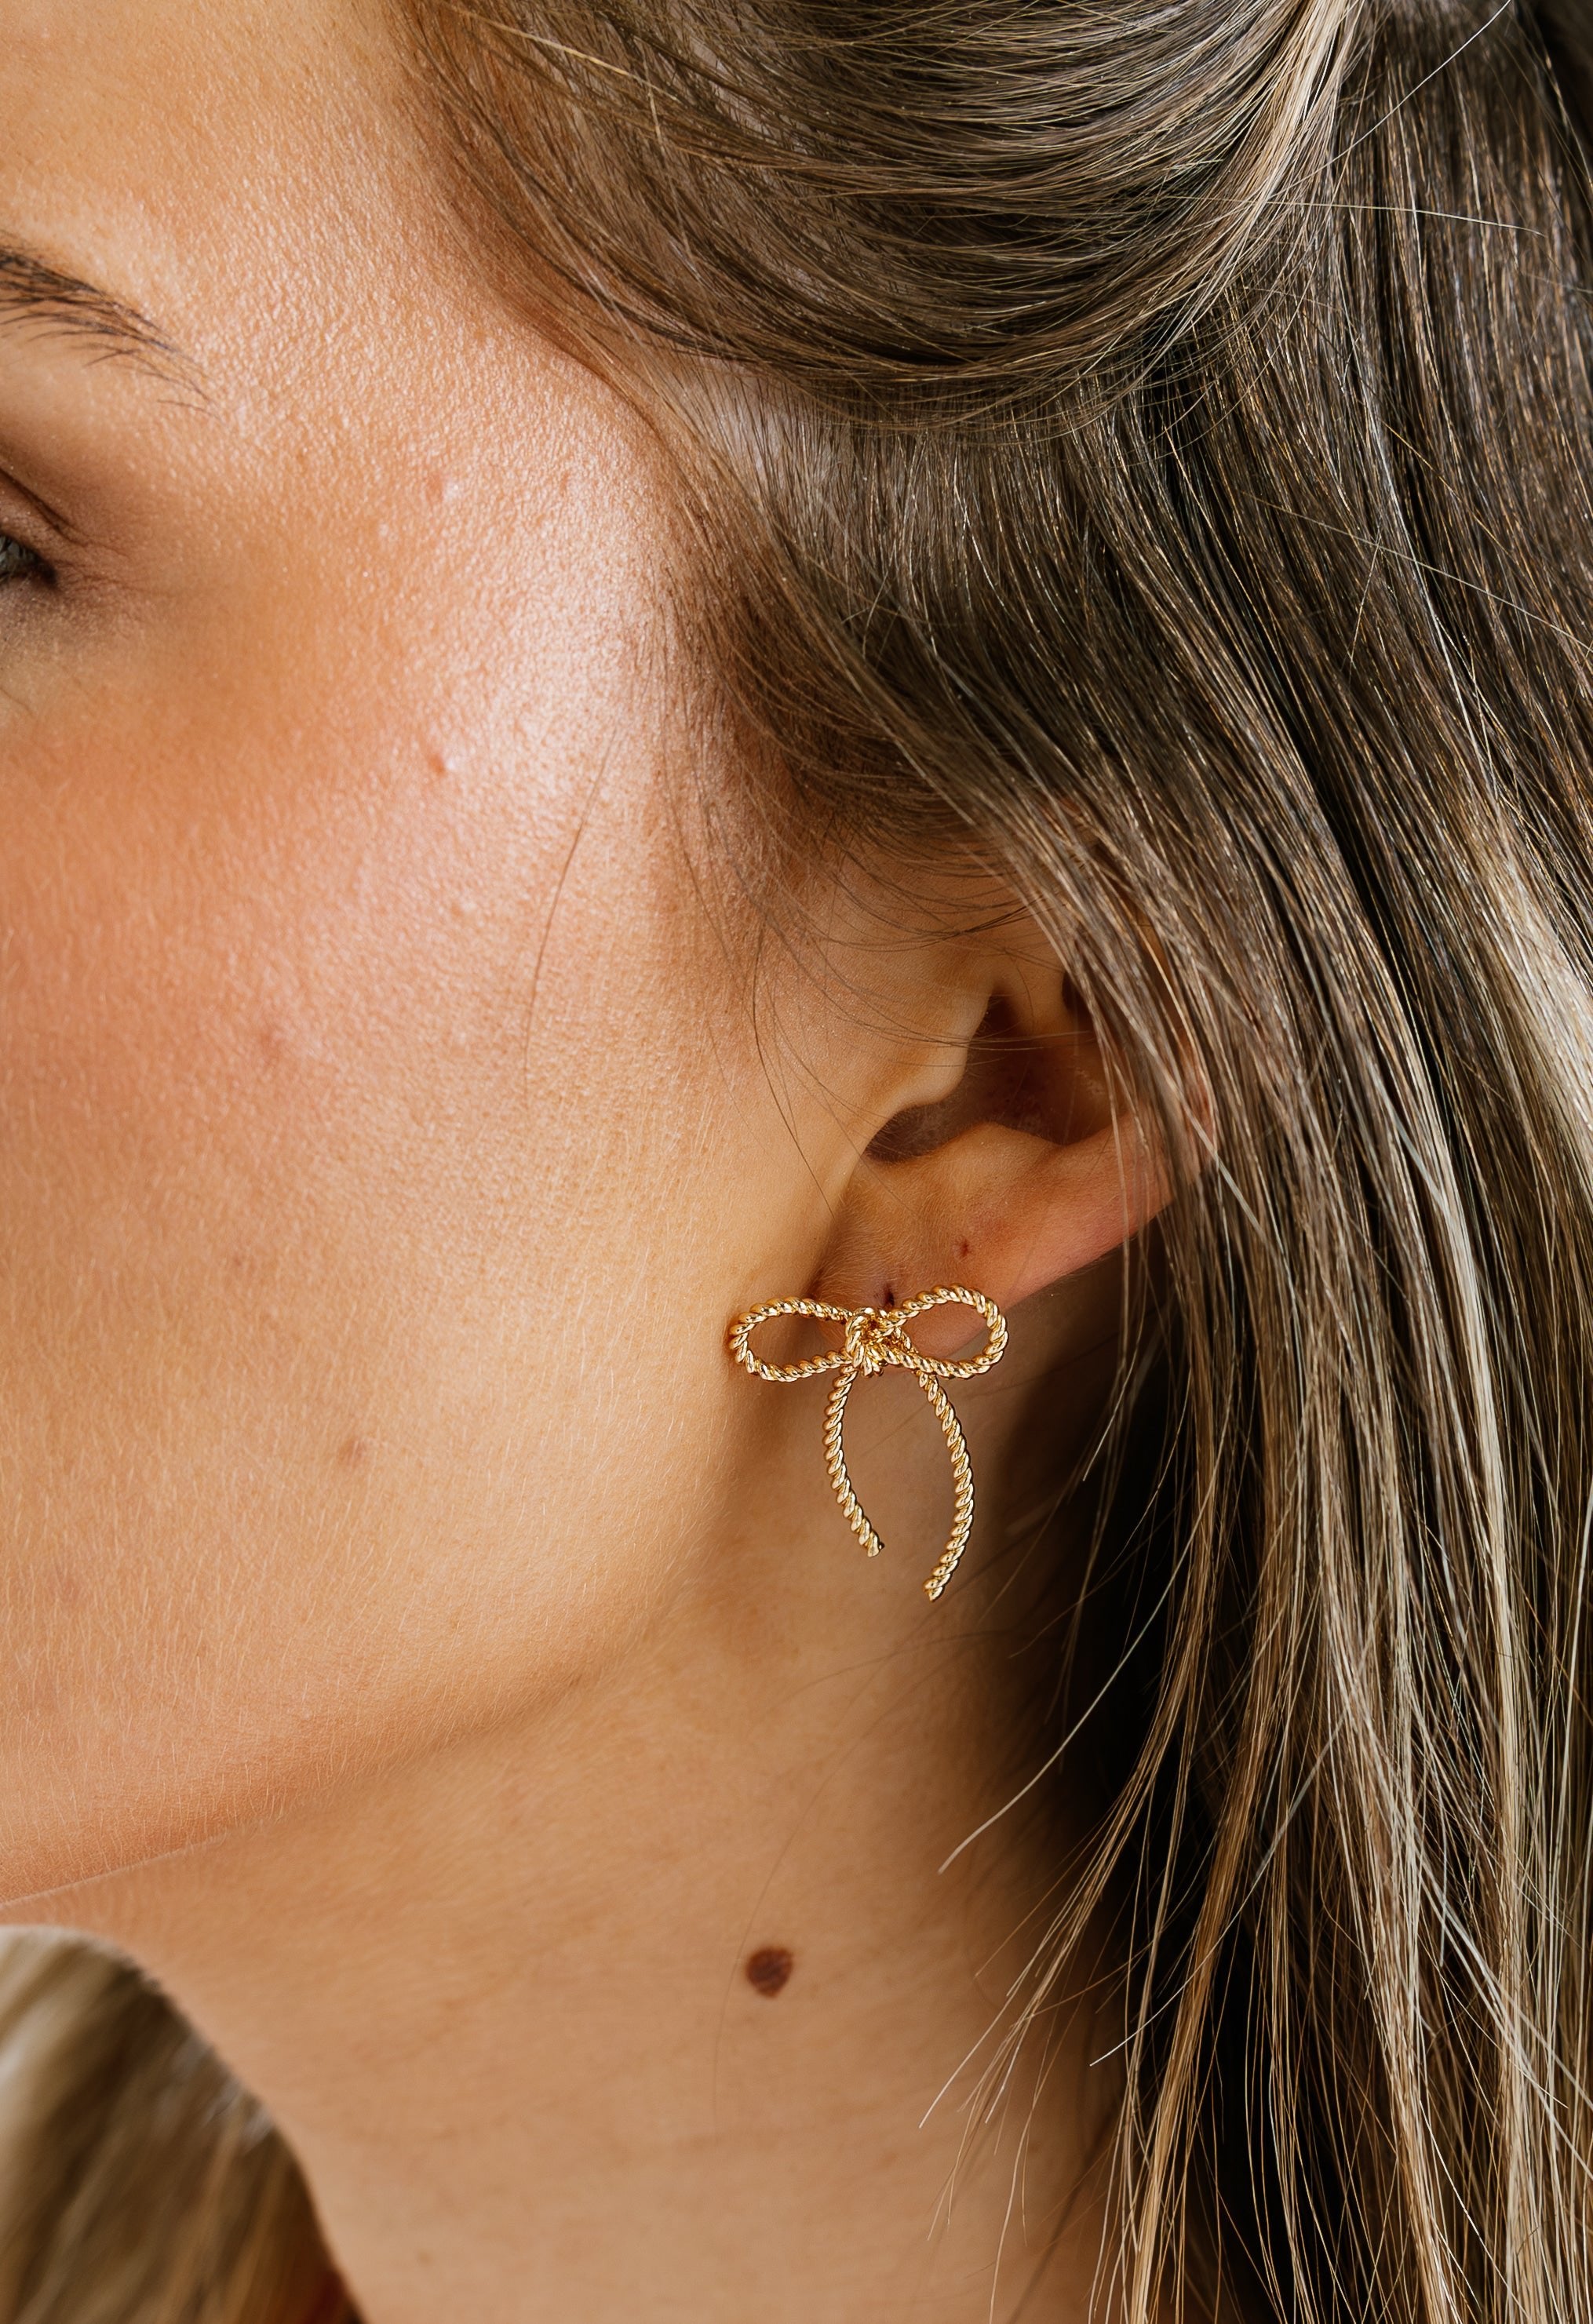 Dollette Earrings - GOLD - willows clothing Earrings